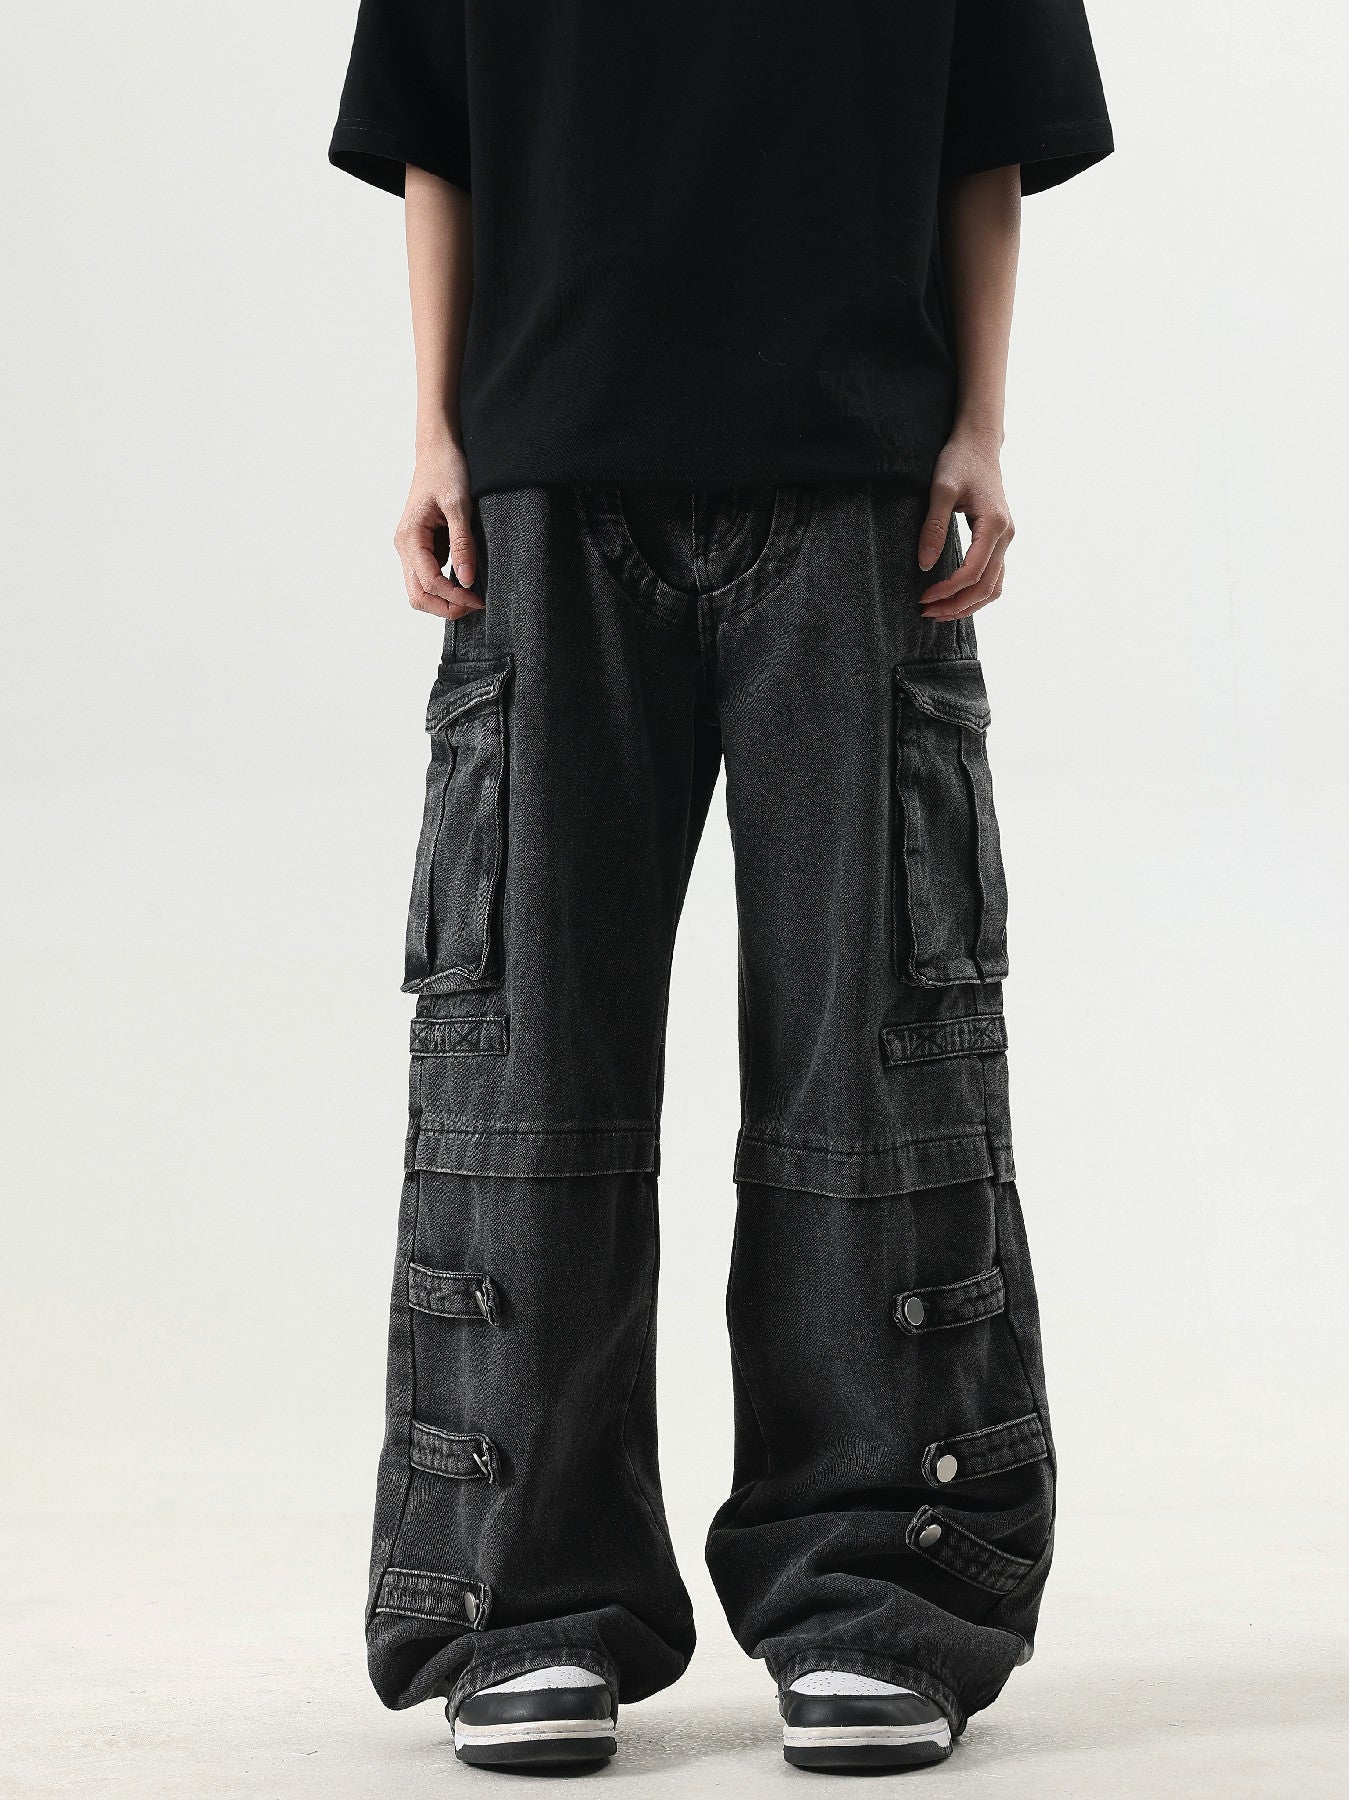 'Buttoned Pocket' Jeans - Santo 